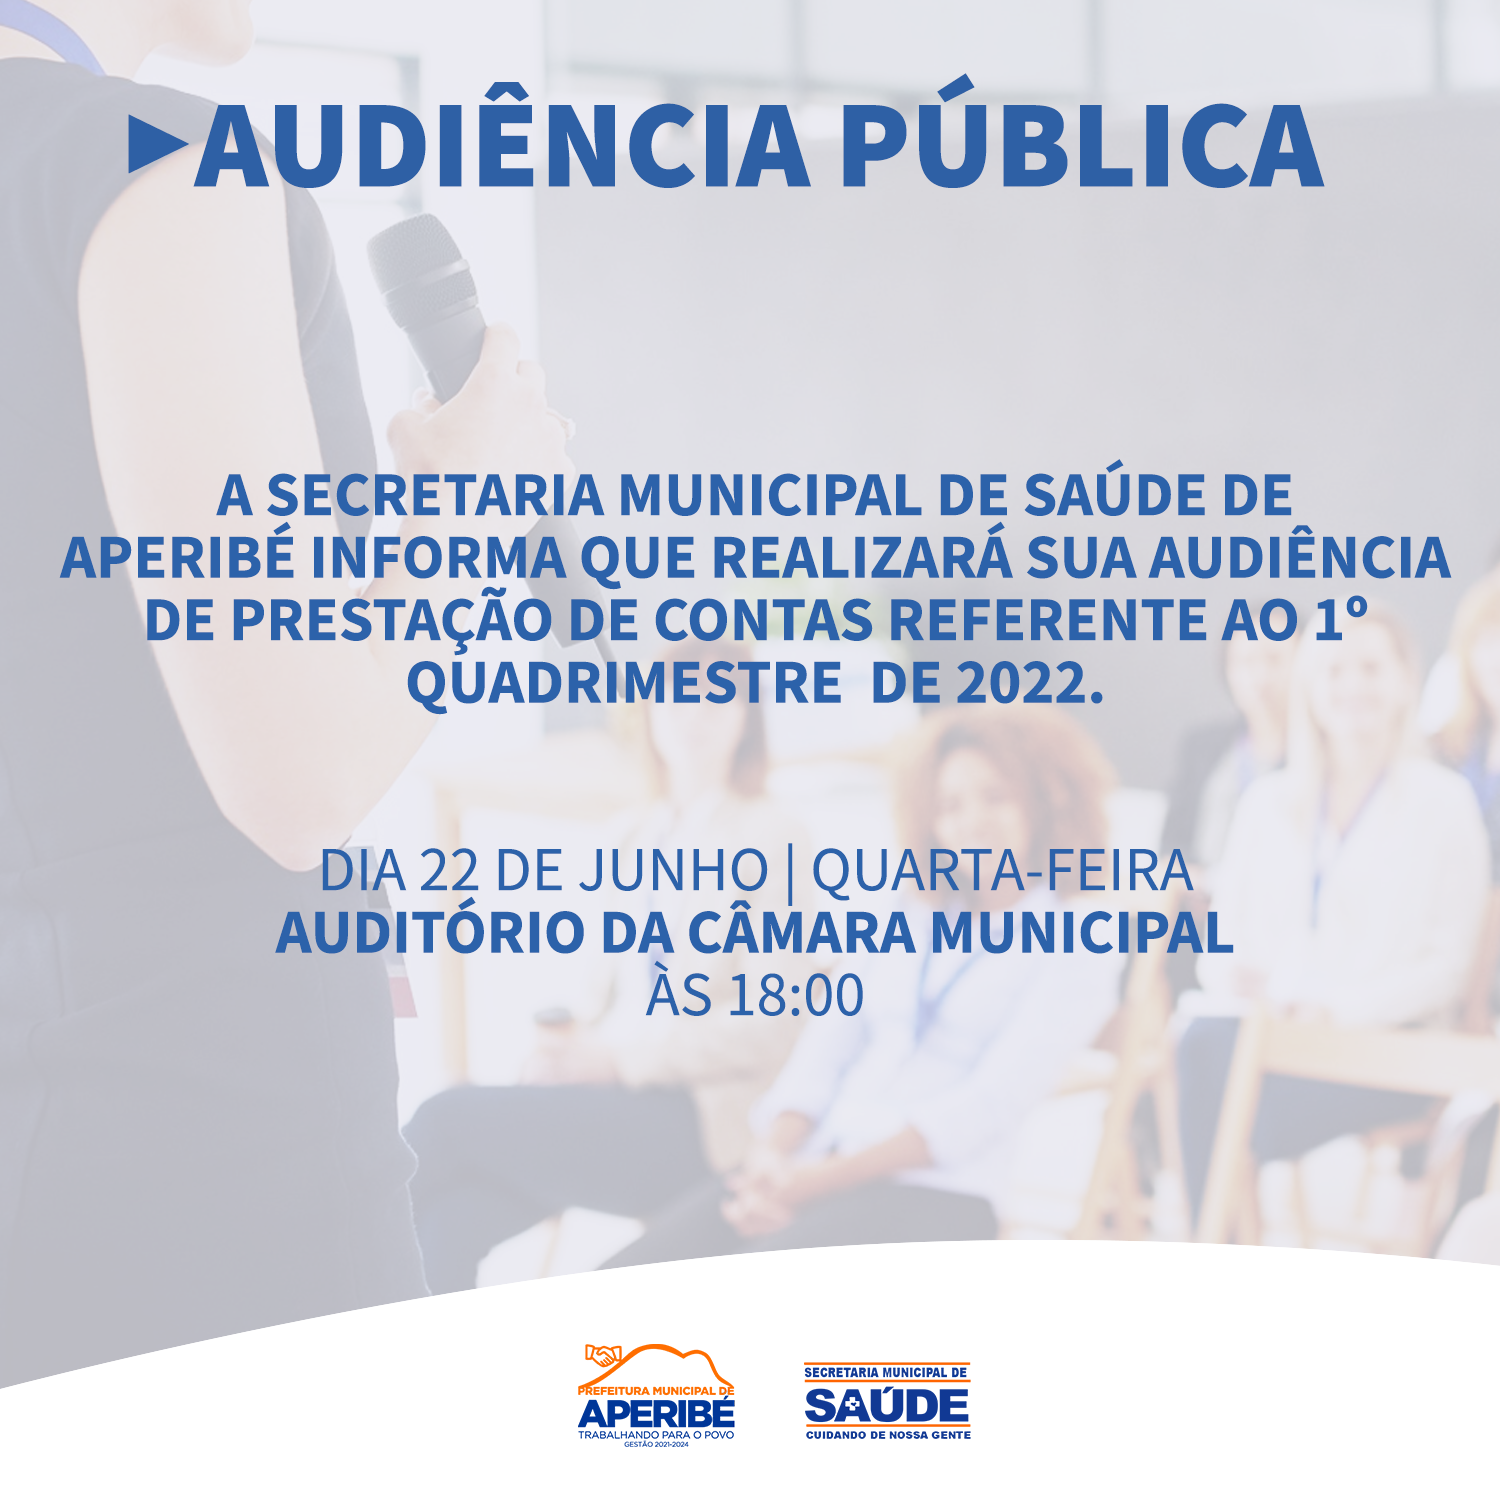 https://www.aperibe.rj.gov.br/arquivos/2022-06-24/audiencia_publica.png